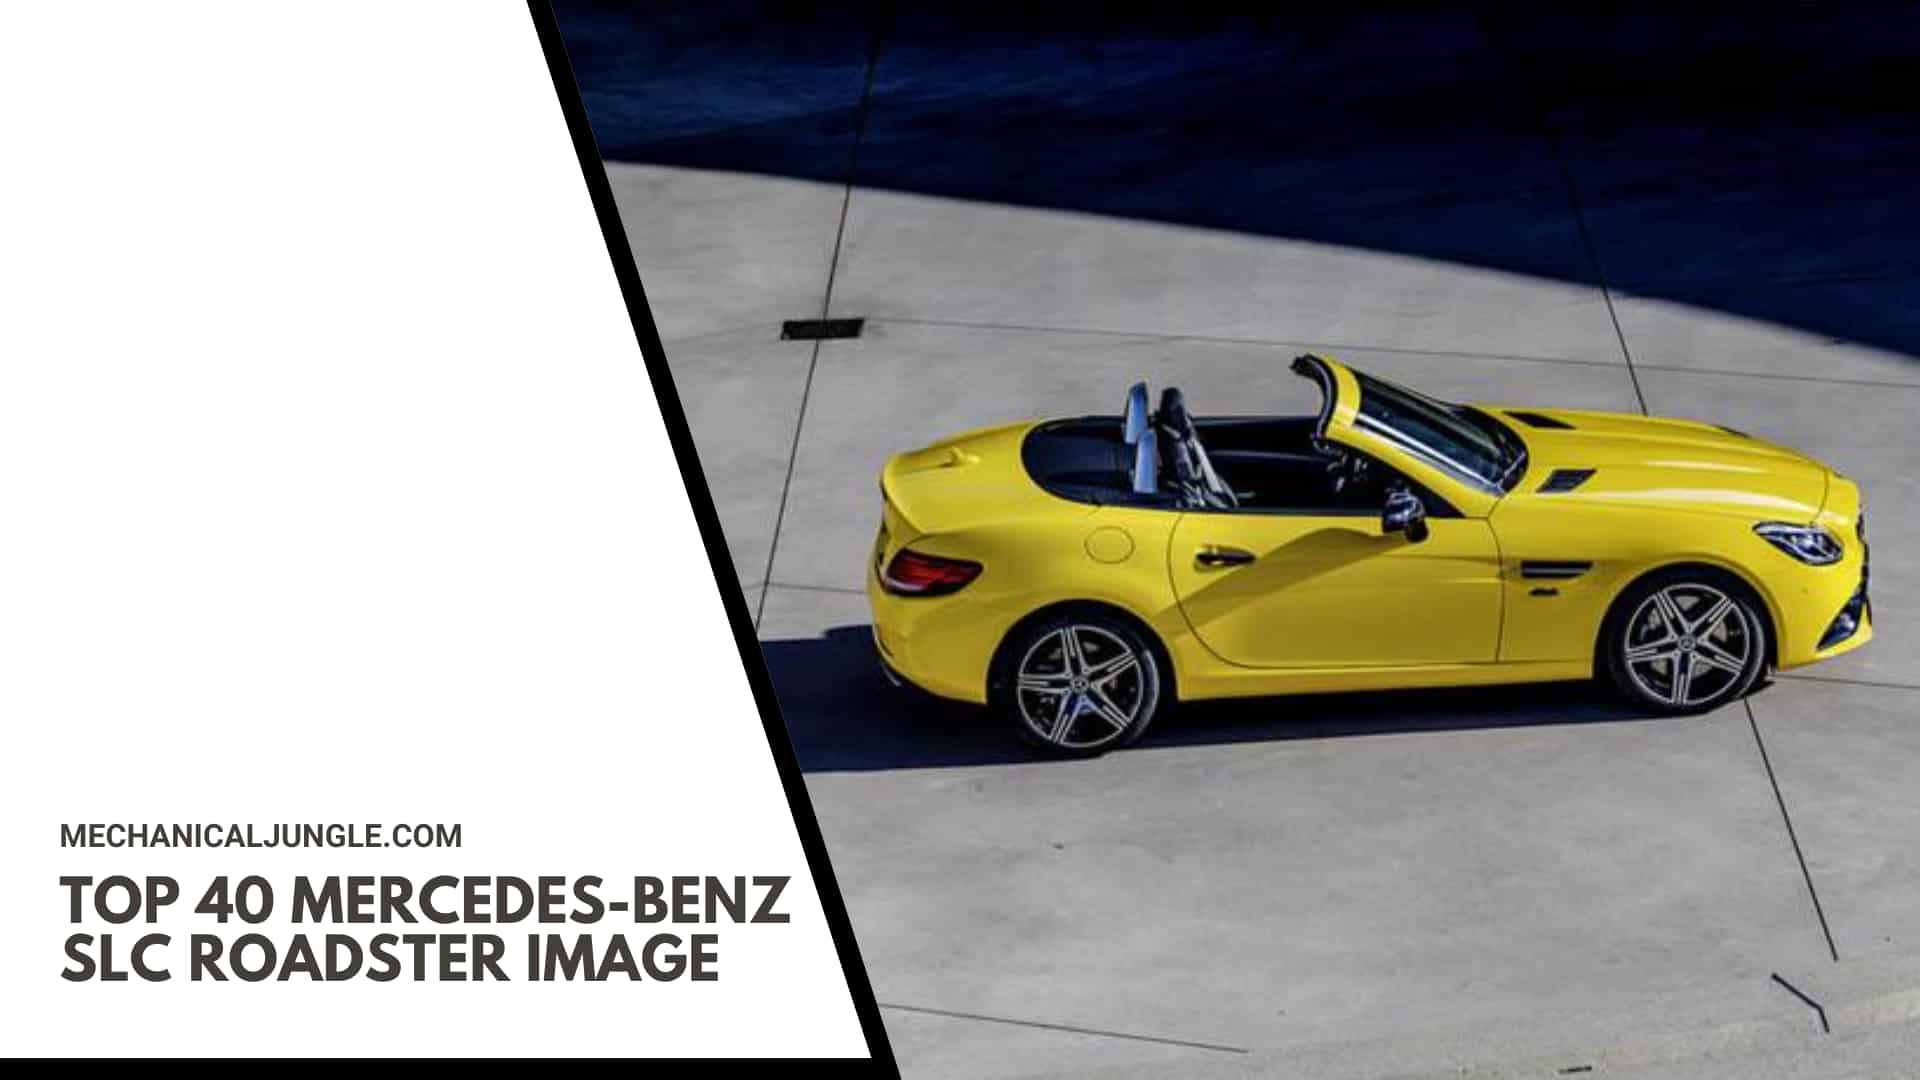 Top 40 Mercedes-Benz SLC Roadster Image